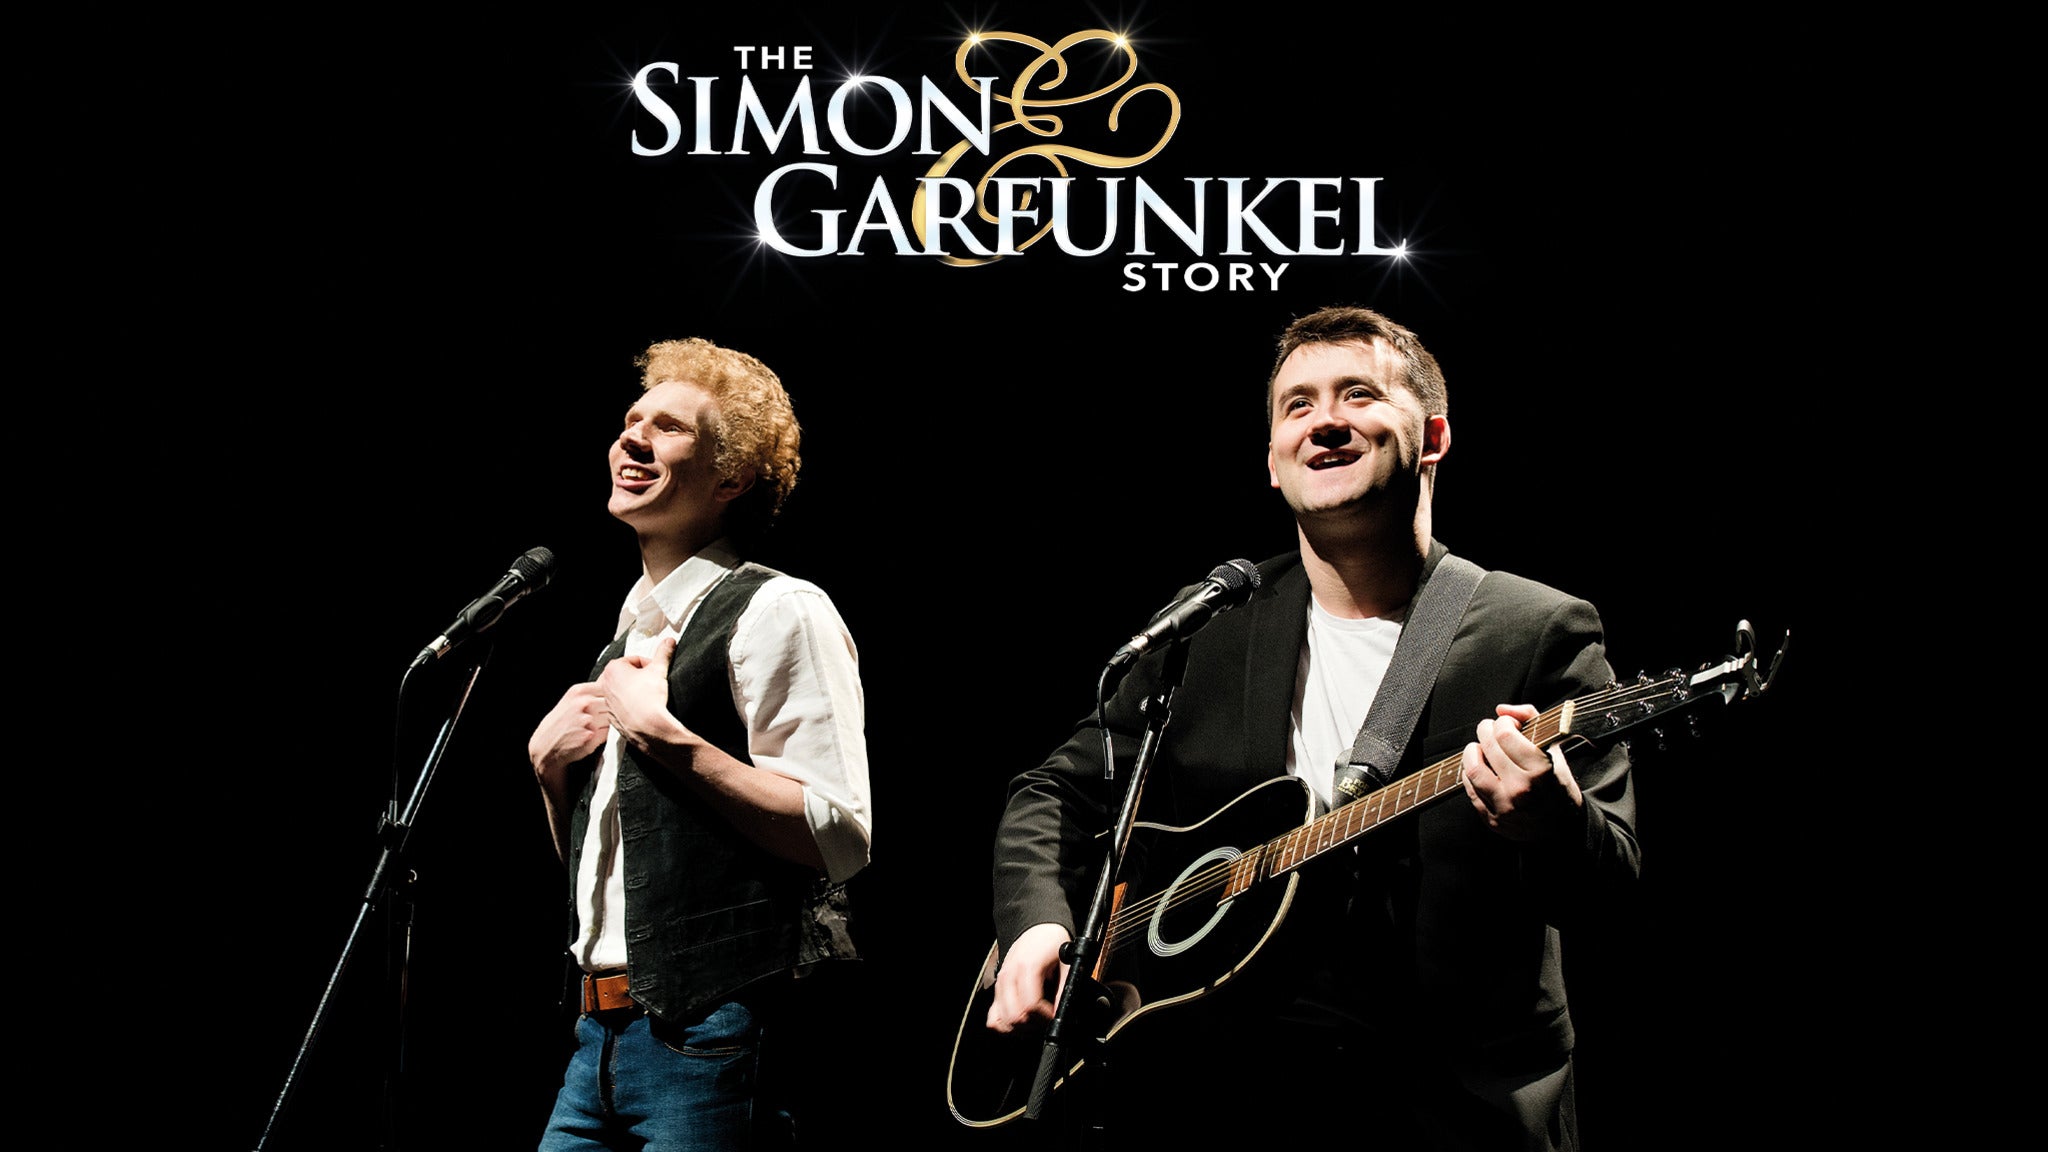 The Simon & Garfunkel Story Tickets, , 22 Mar 2022 Eventjams